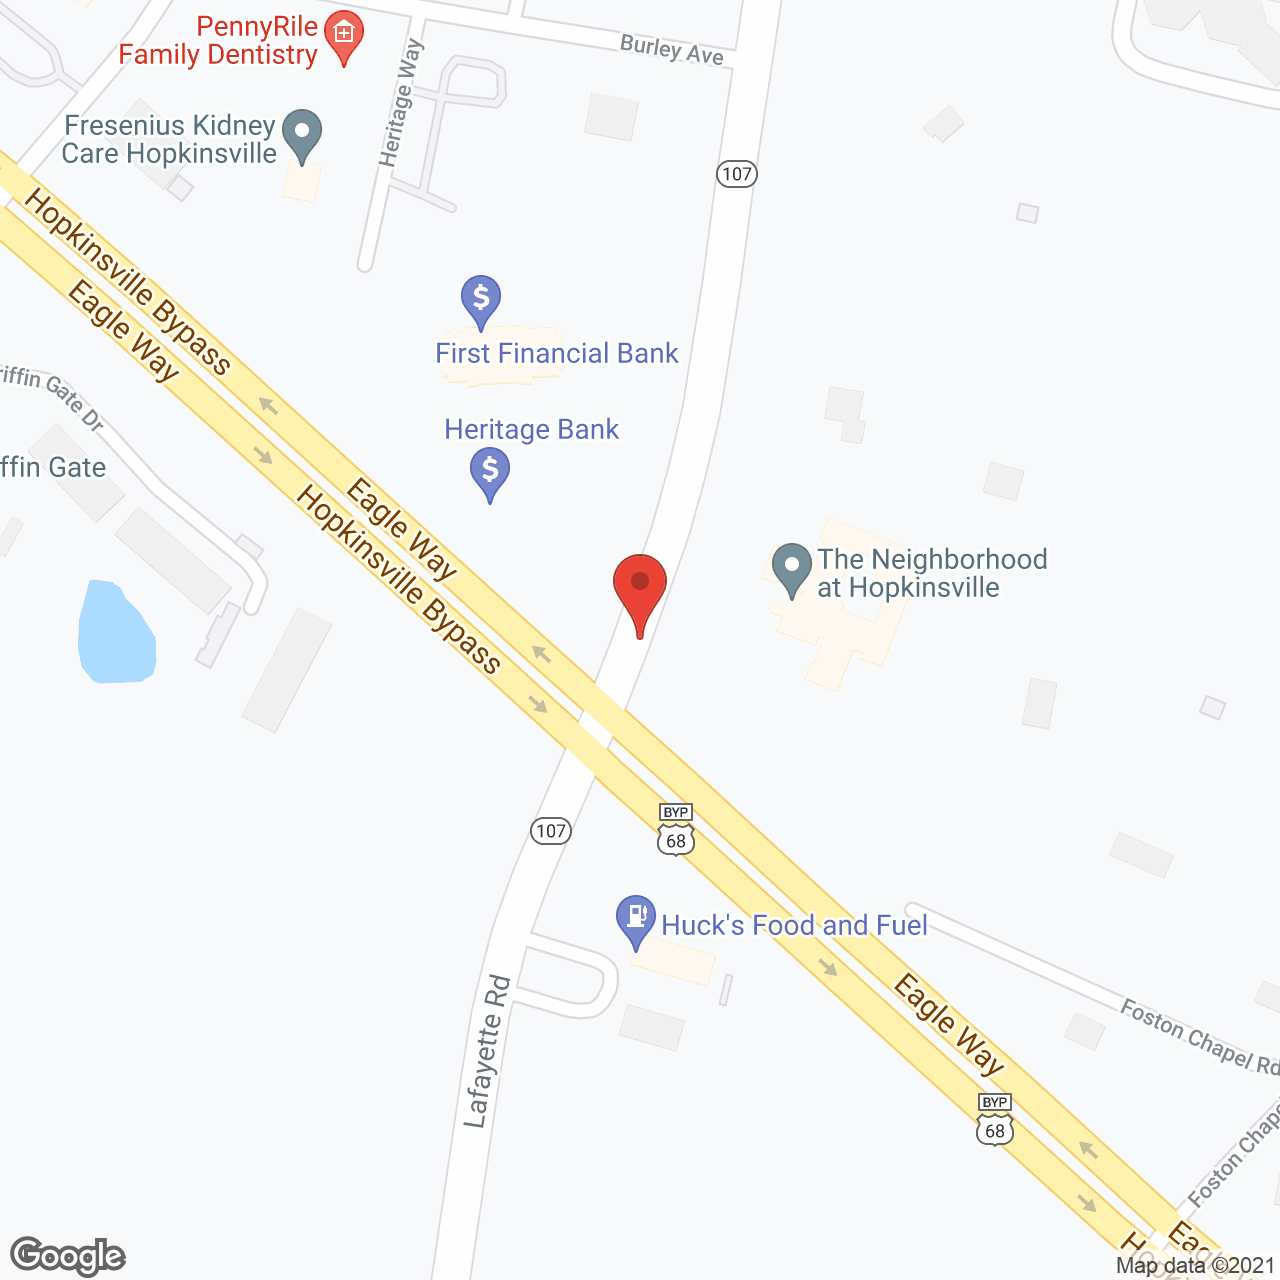 The Neighborhood at Hopkinsville in google map